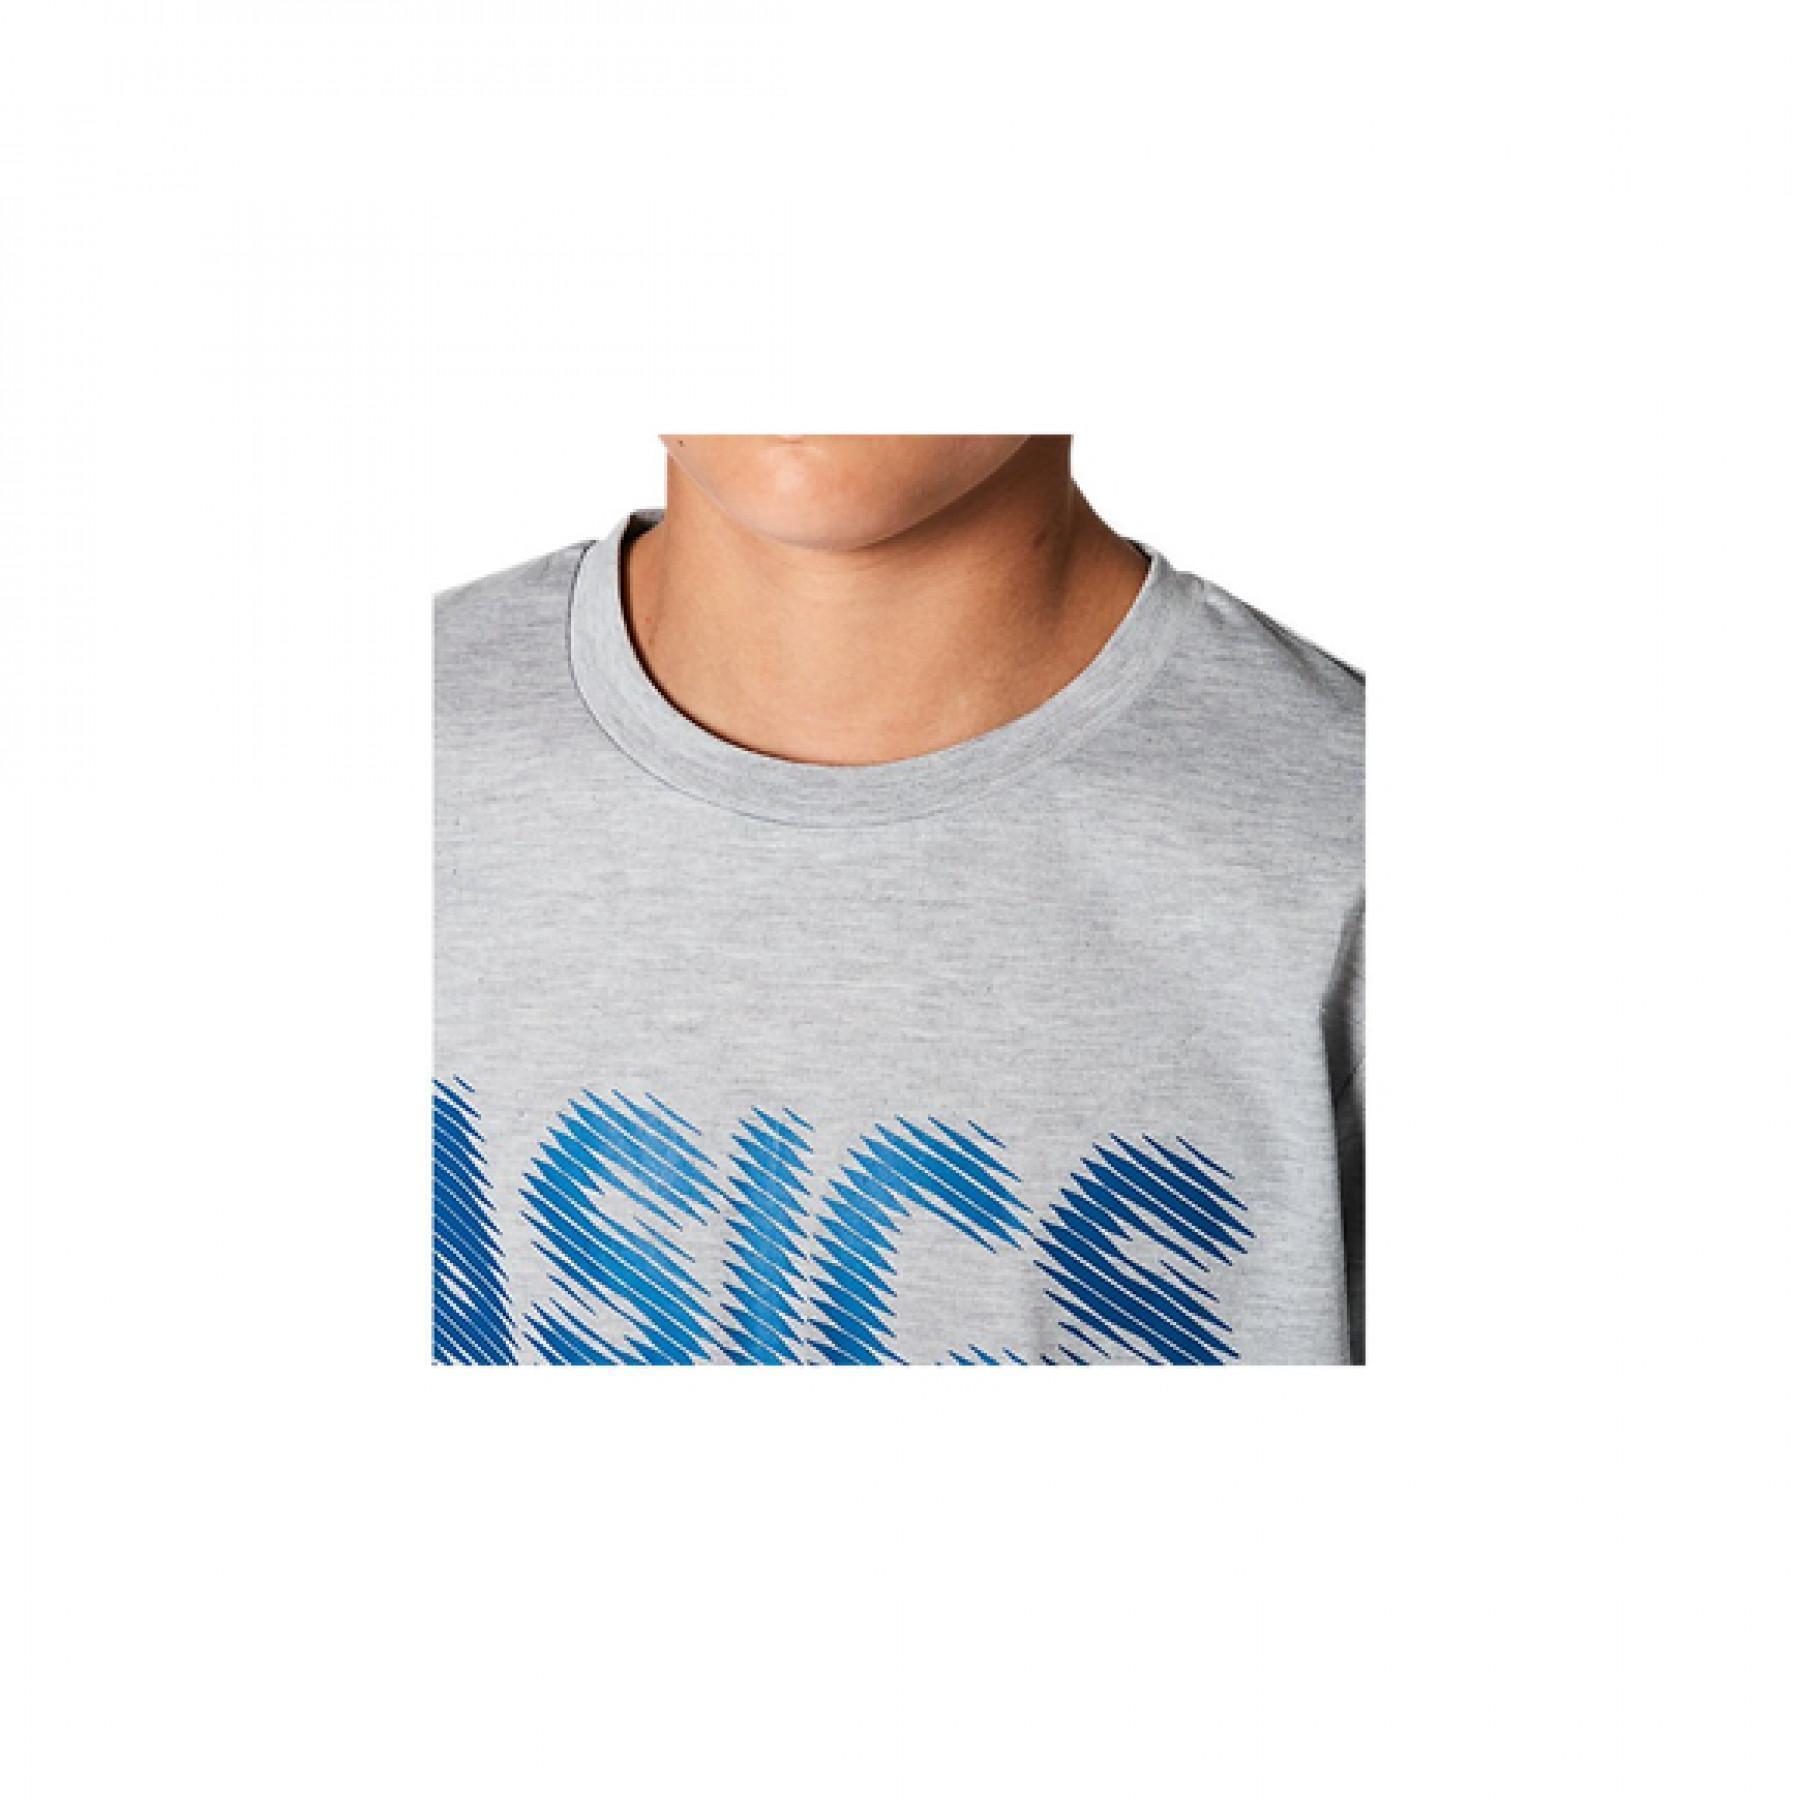 Kinder-T-shirt Asics Gpxt